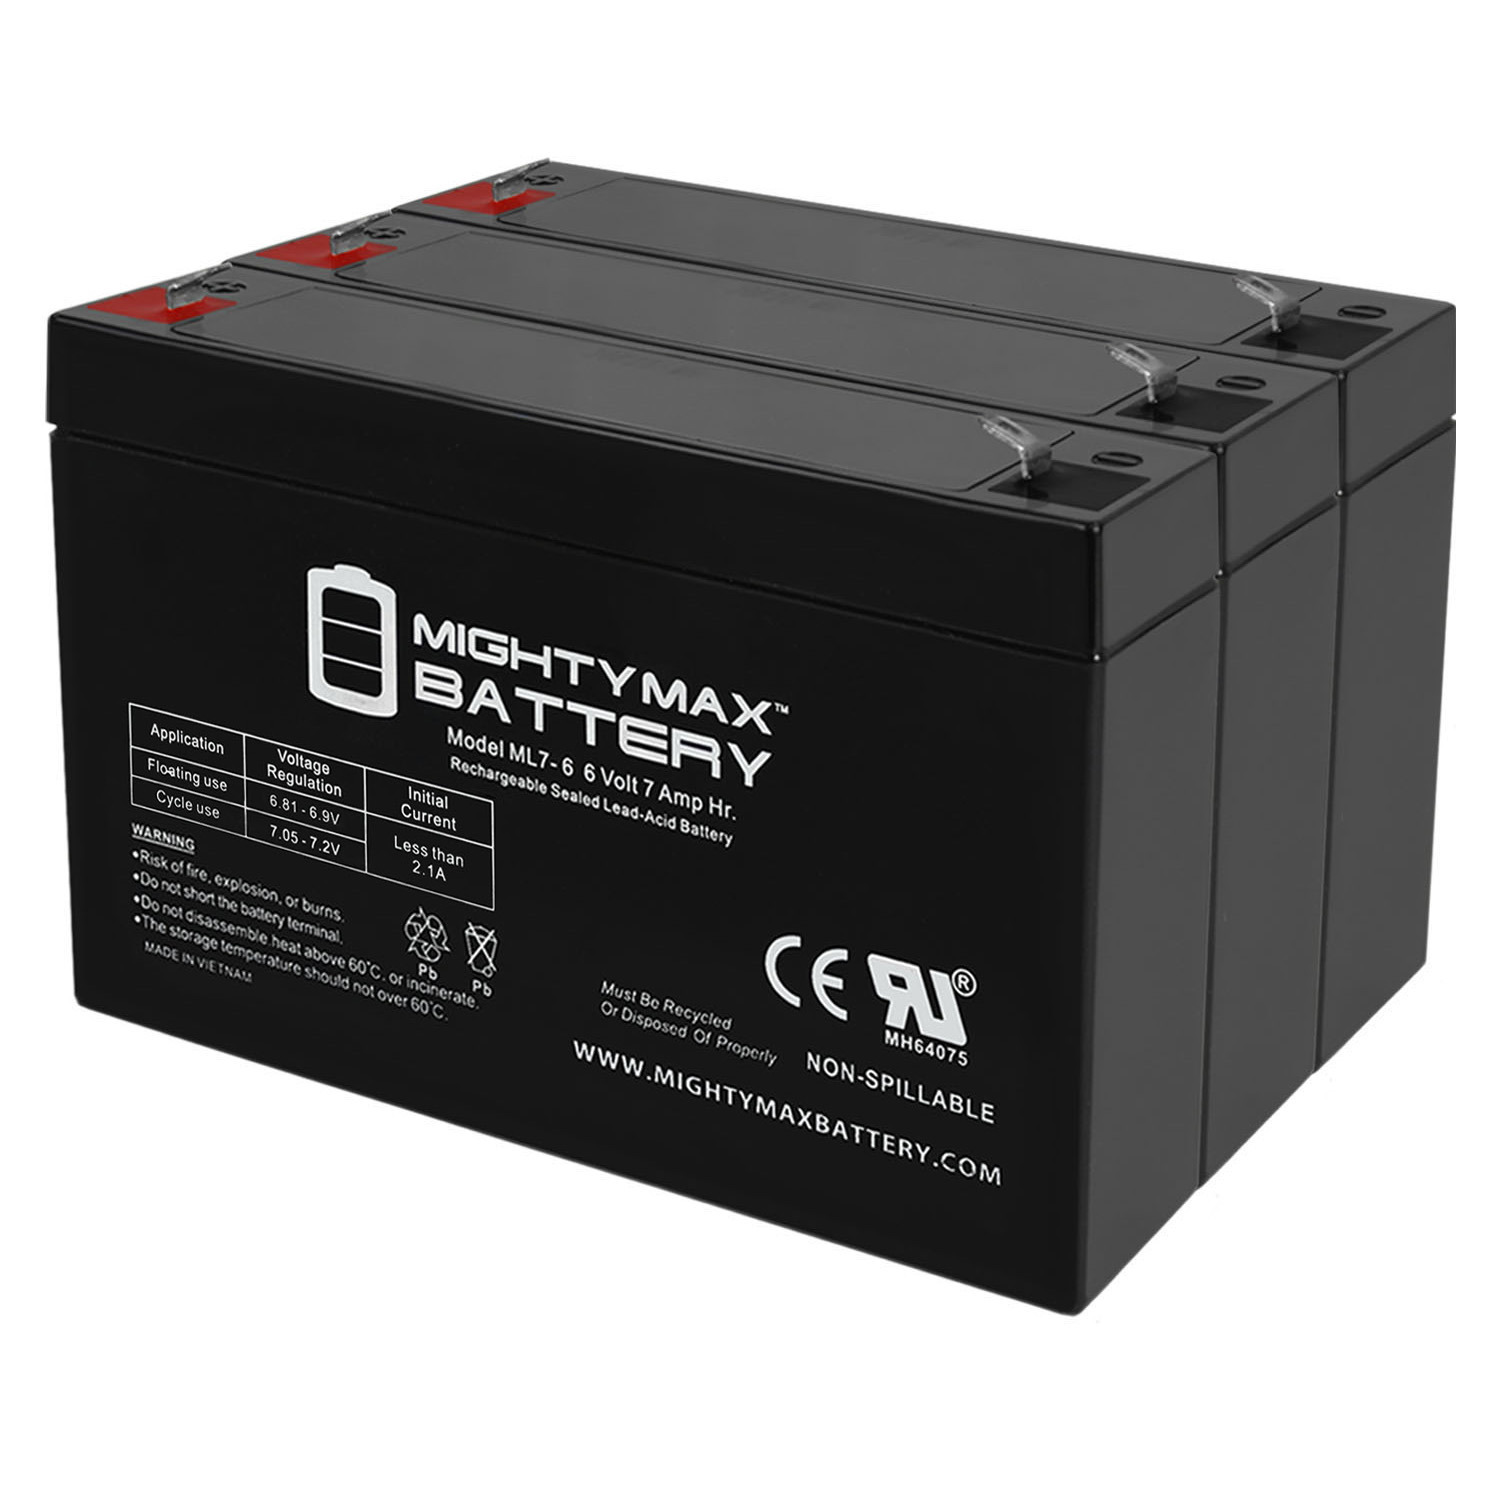 6V 7Ah SLA Replacement Battery for Lifeline RC Switchboard Medical - 3 Pack